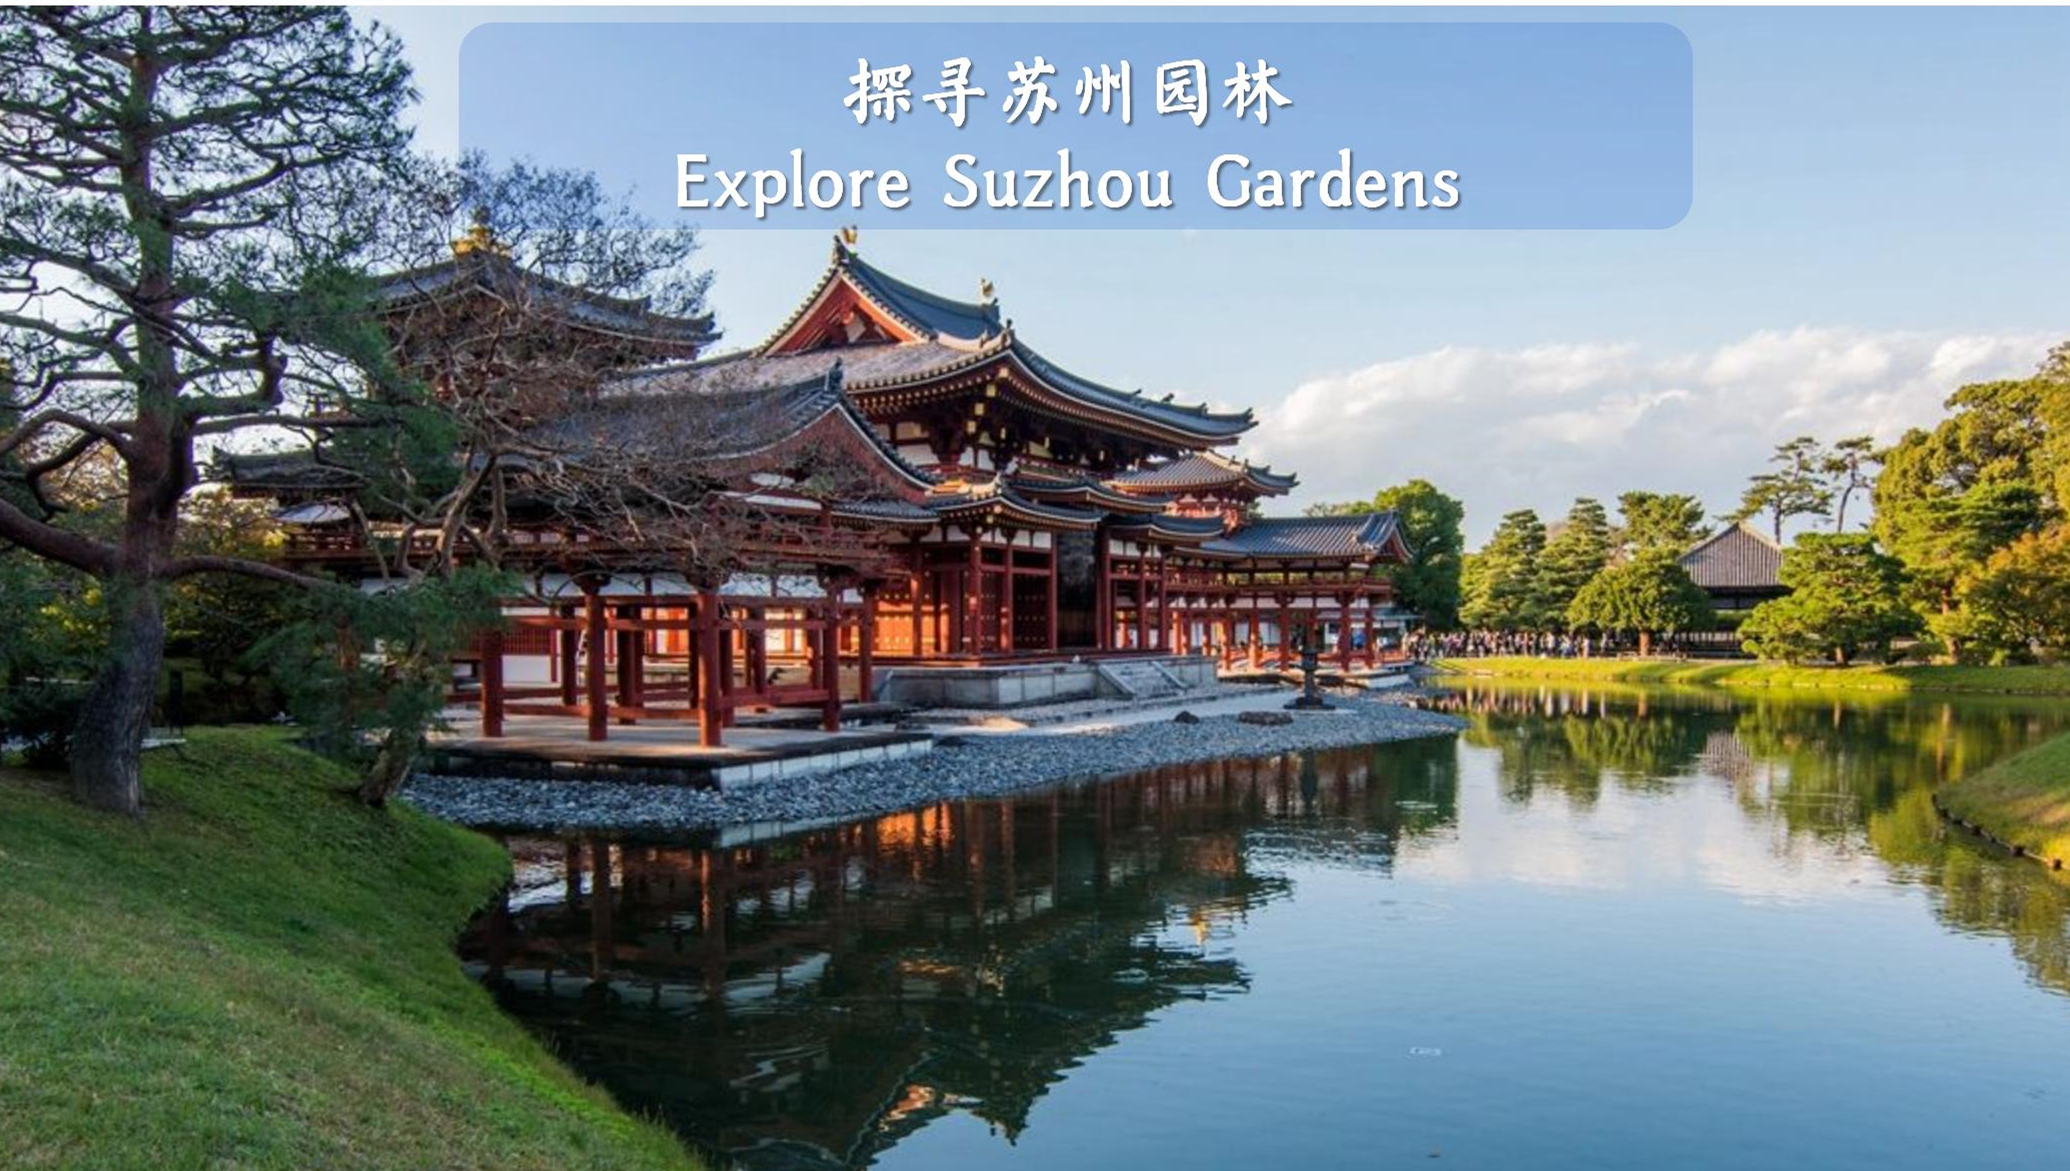 Explore Suzhou Gardens